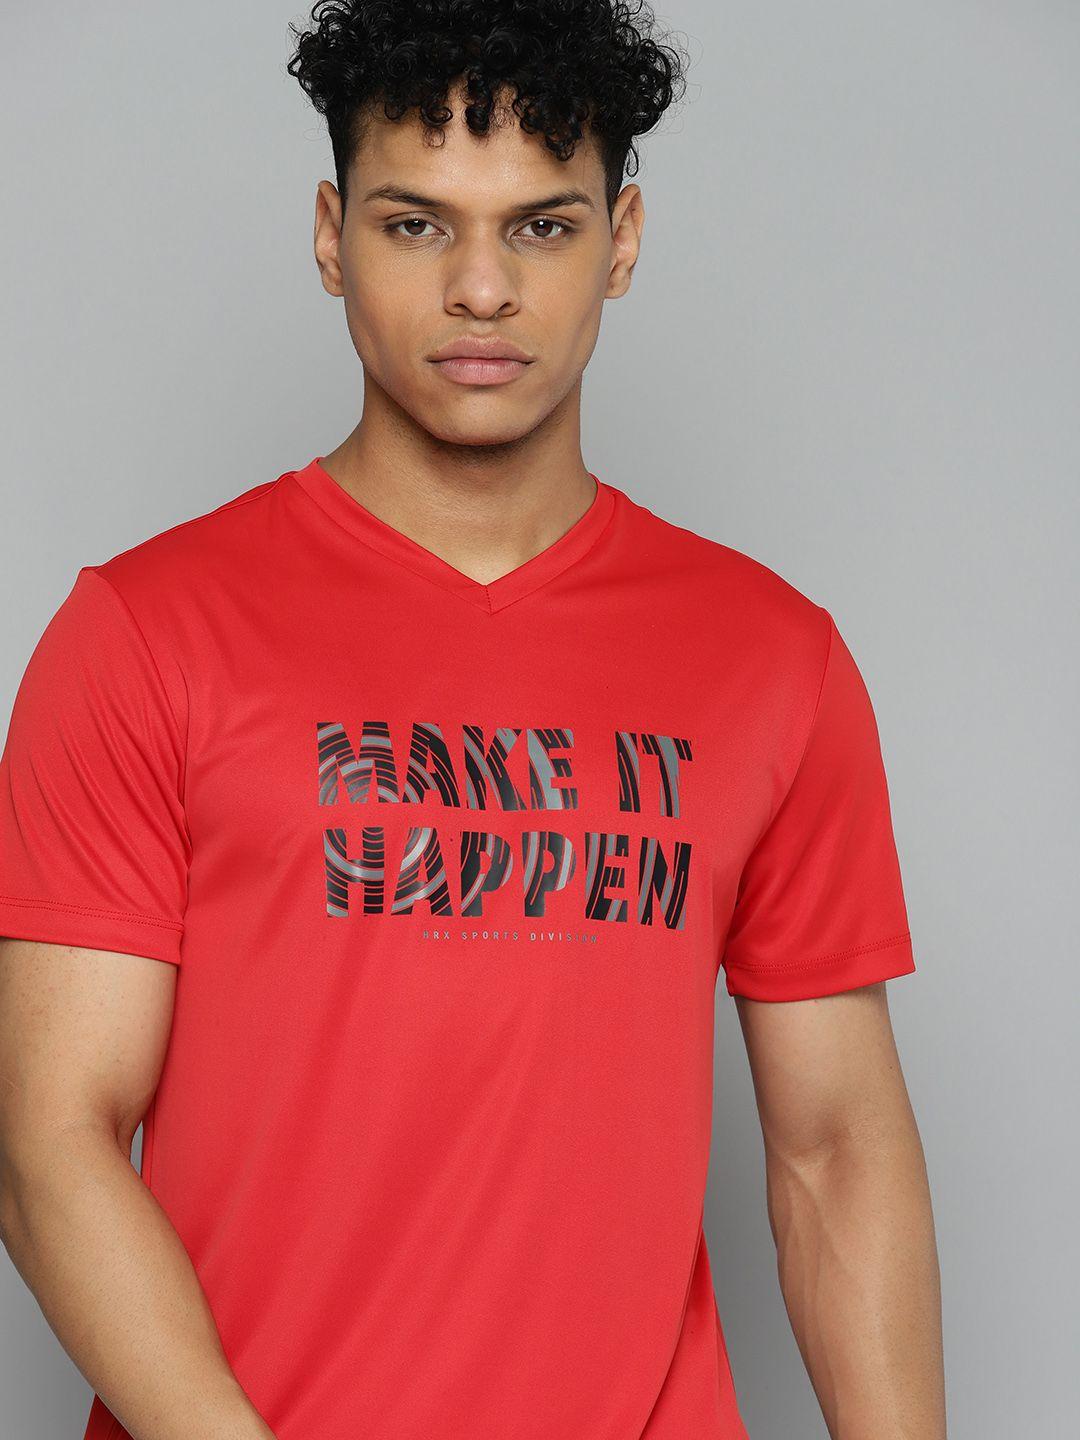 hrx by hrithik roshan men typography printed v-neck badminton t-shirt